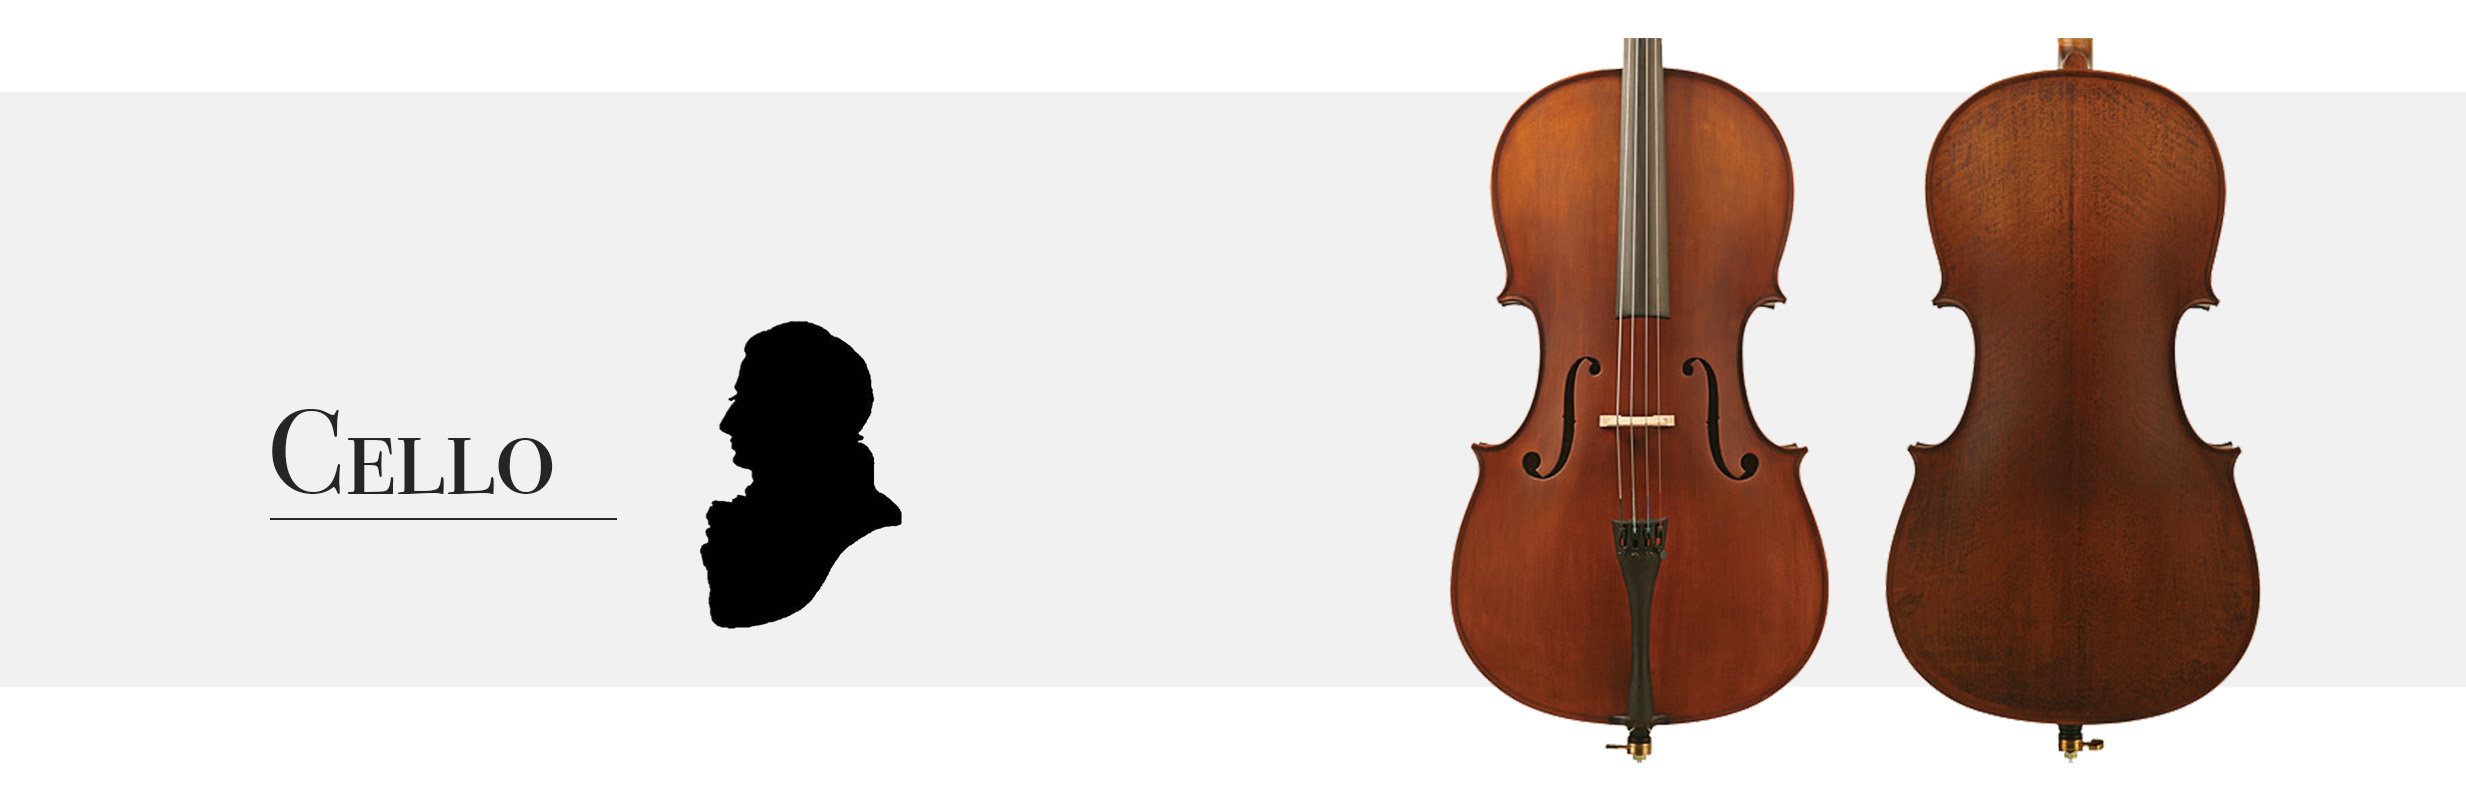 Cello page header